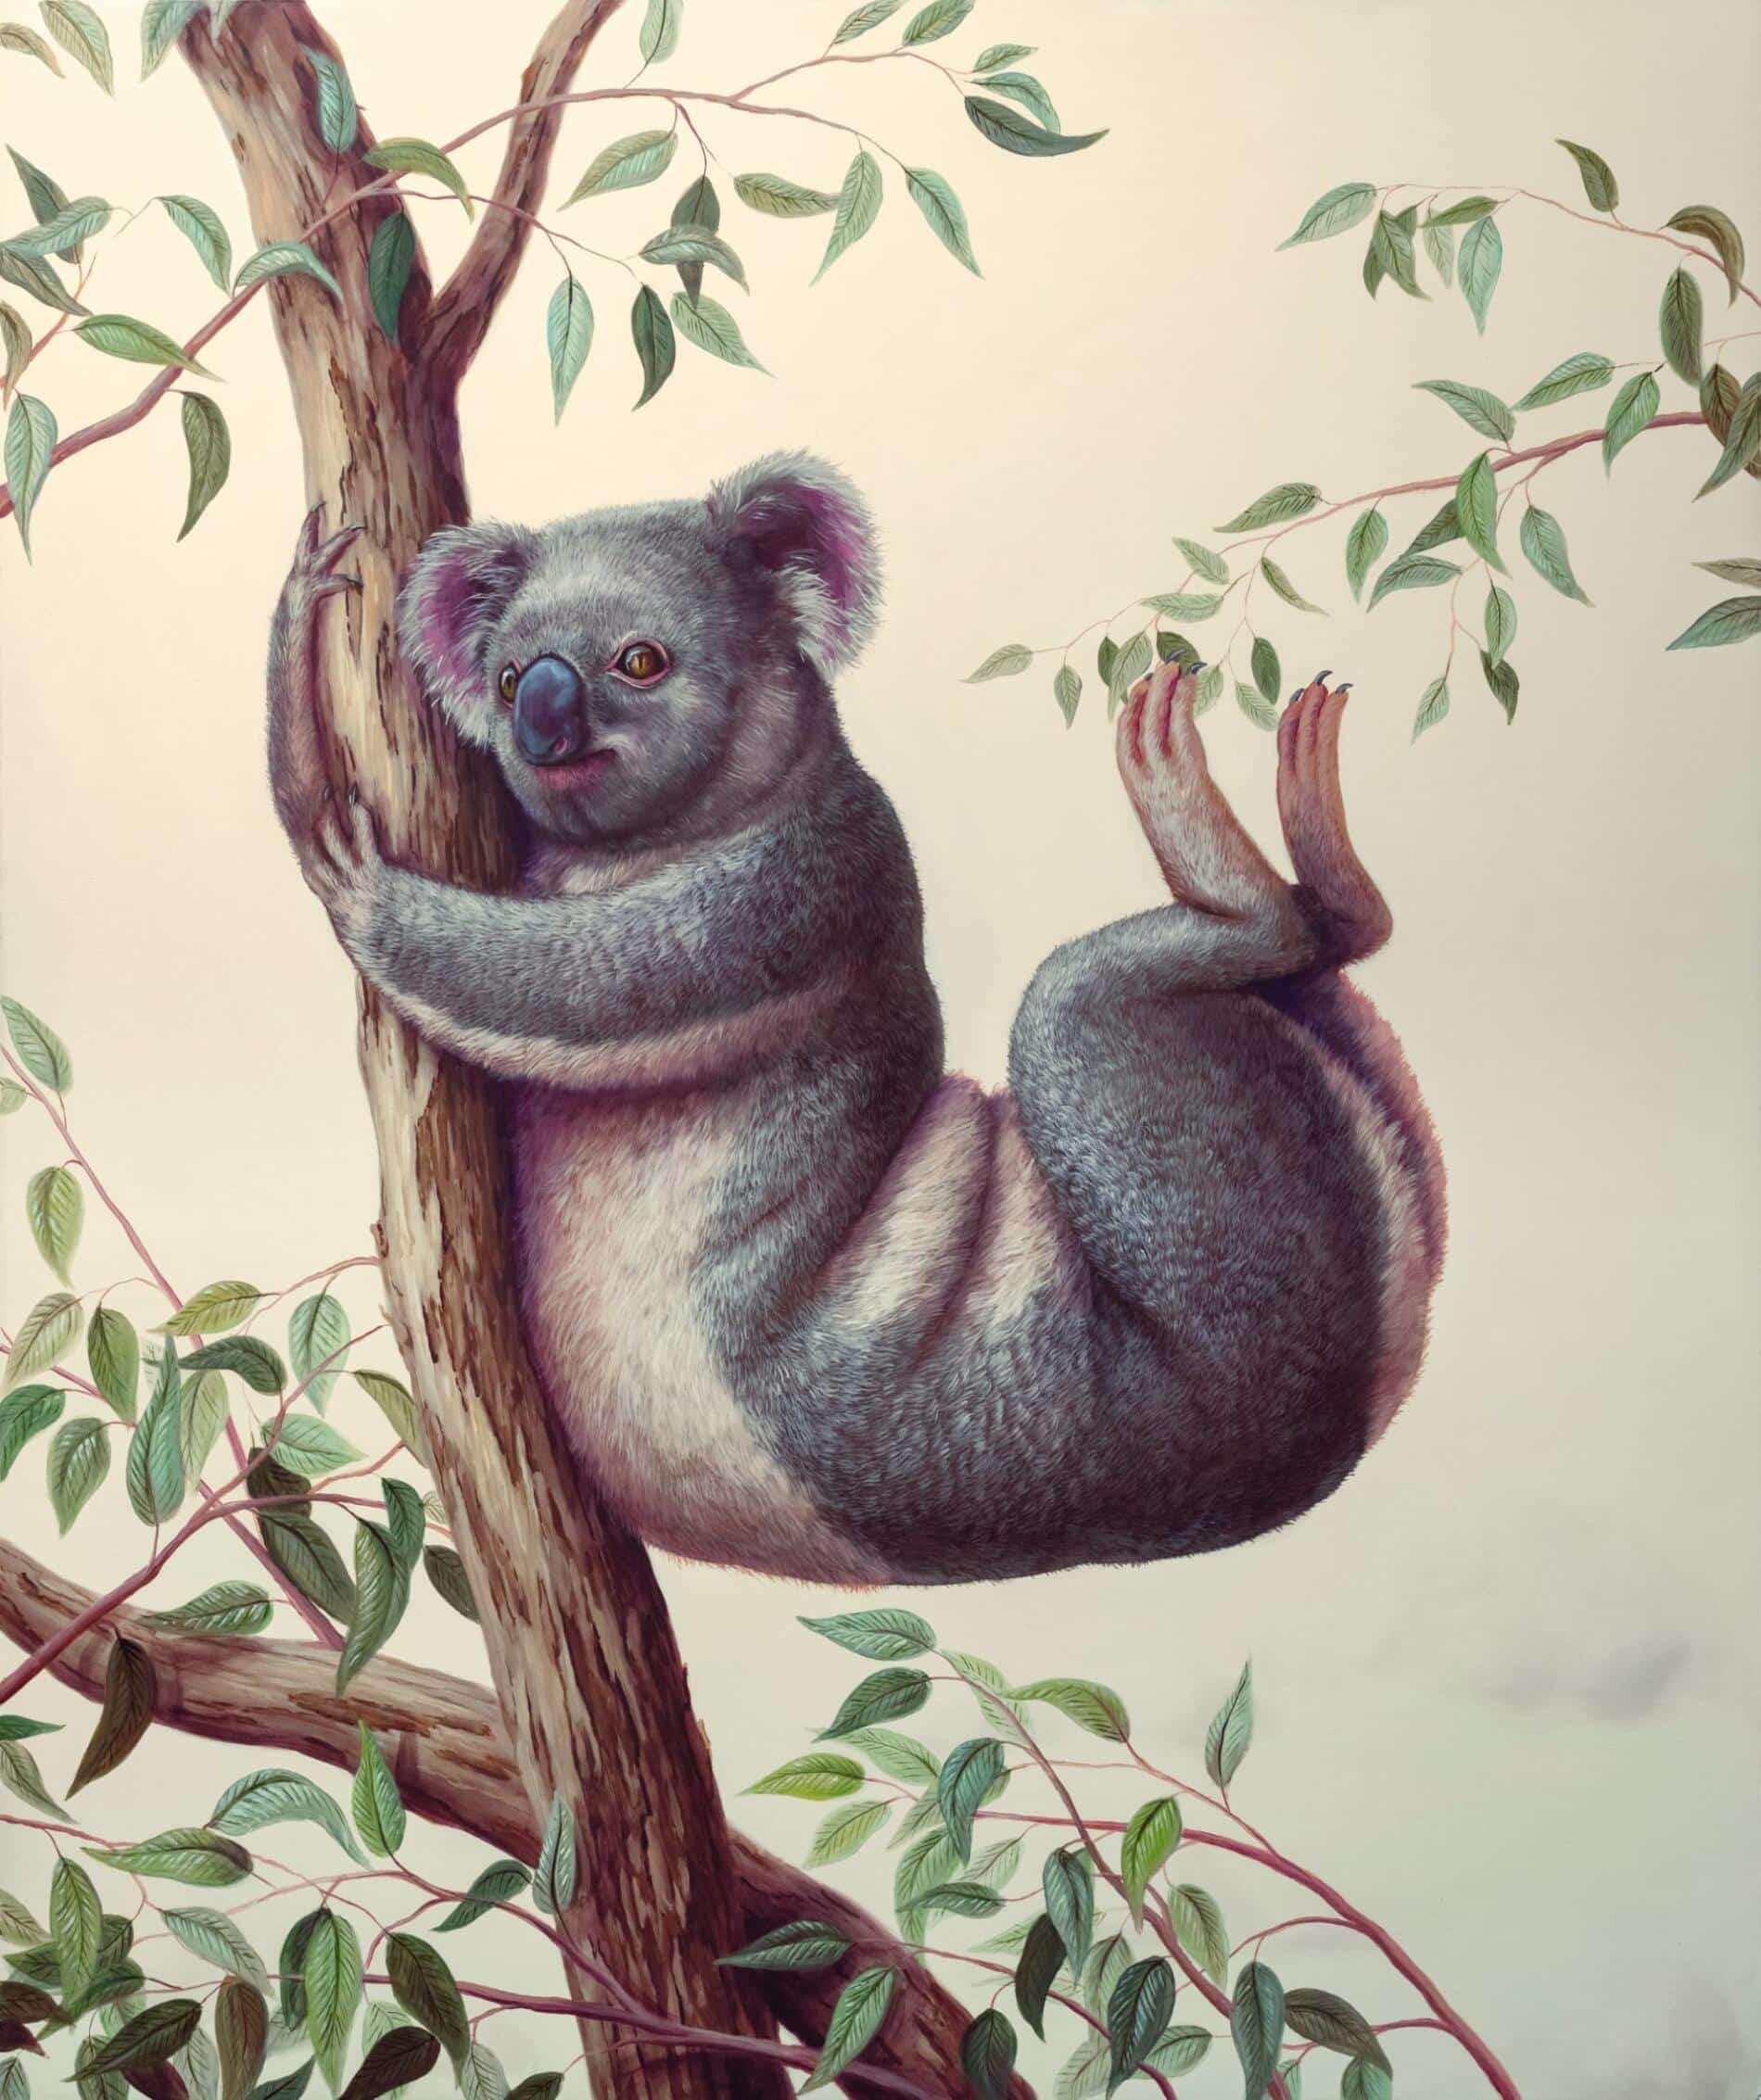 Bruno Pontiroli ointura surreal onitico koala